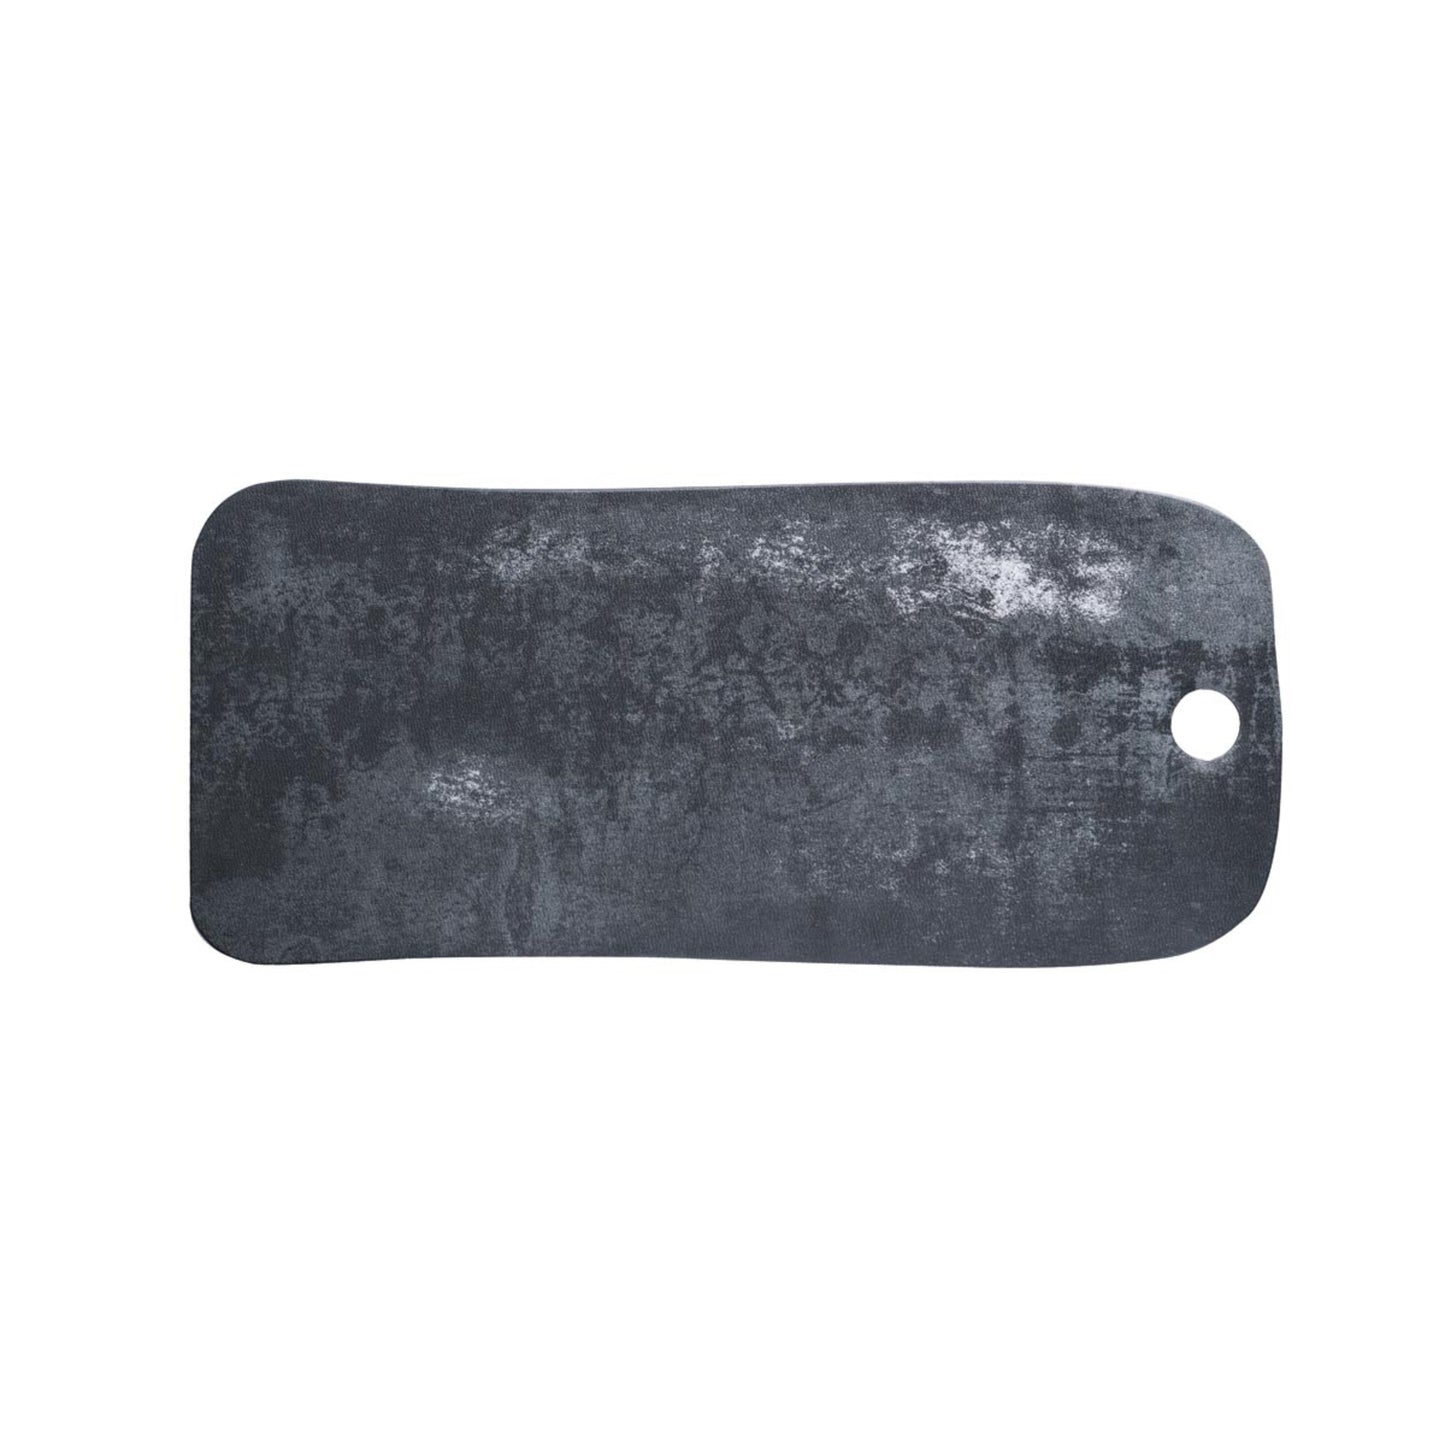 20.13" lapis grey granite melamine board (large), 20.13"L x 9"W, x .5"H, GET, cheforward